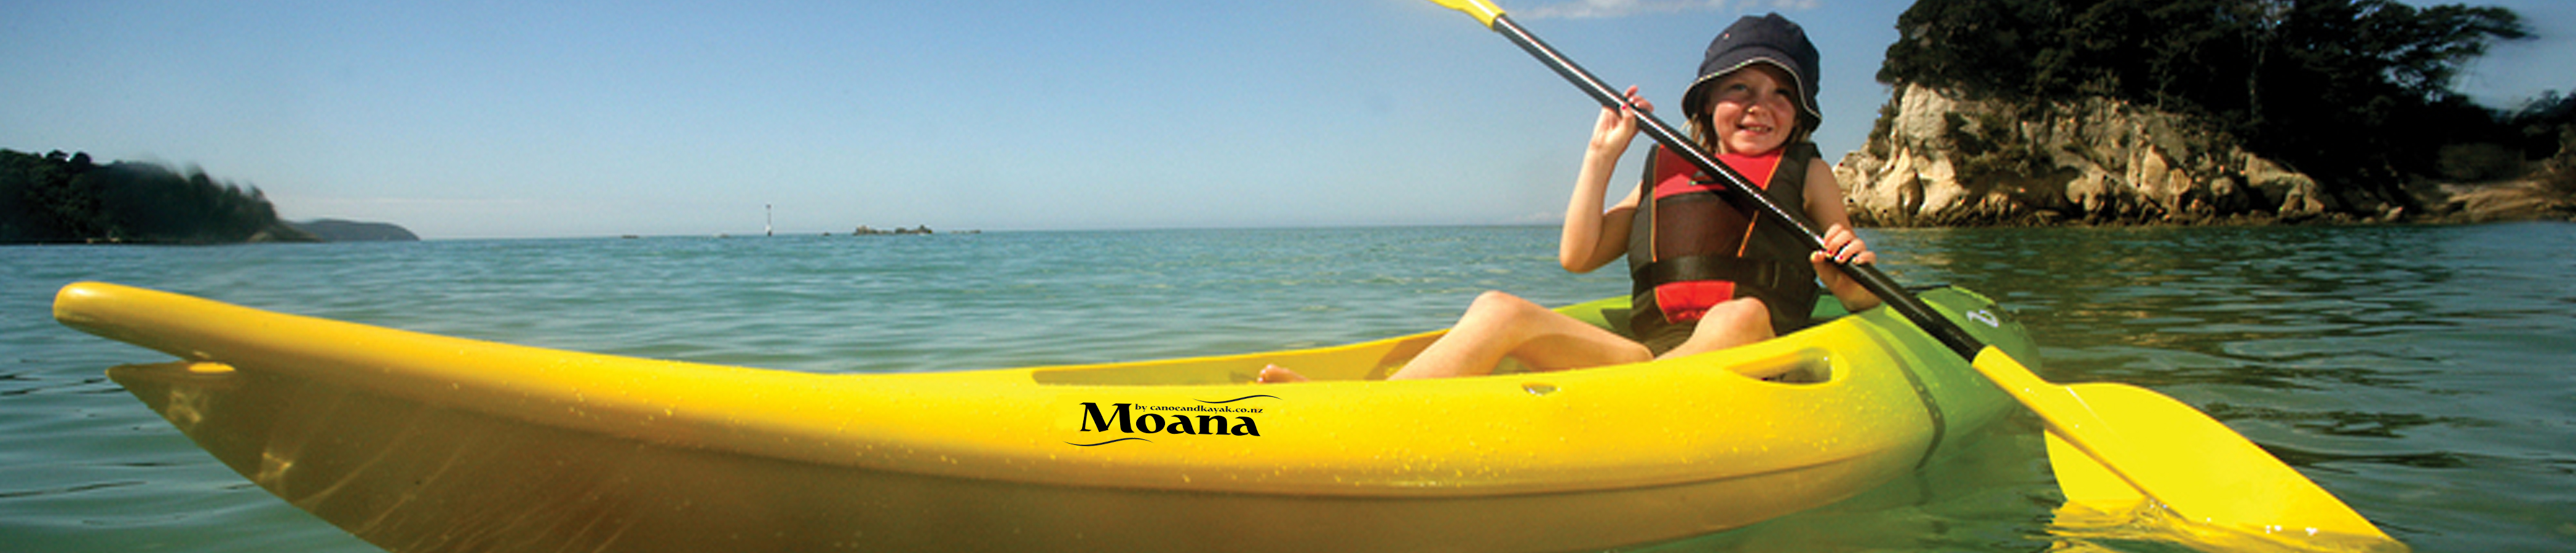 Mission Moana sit on top kayak Banner